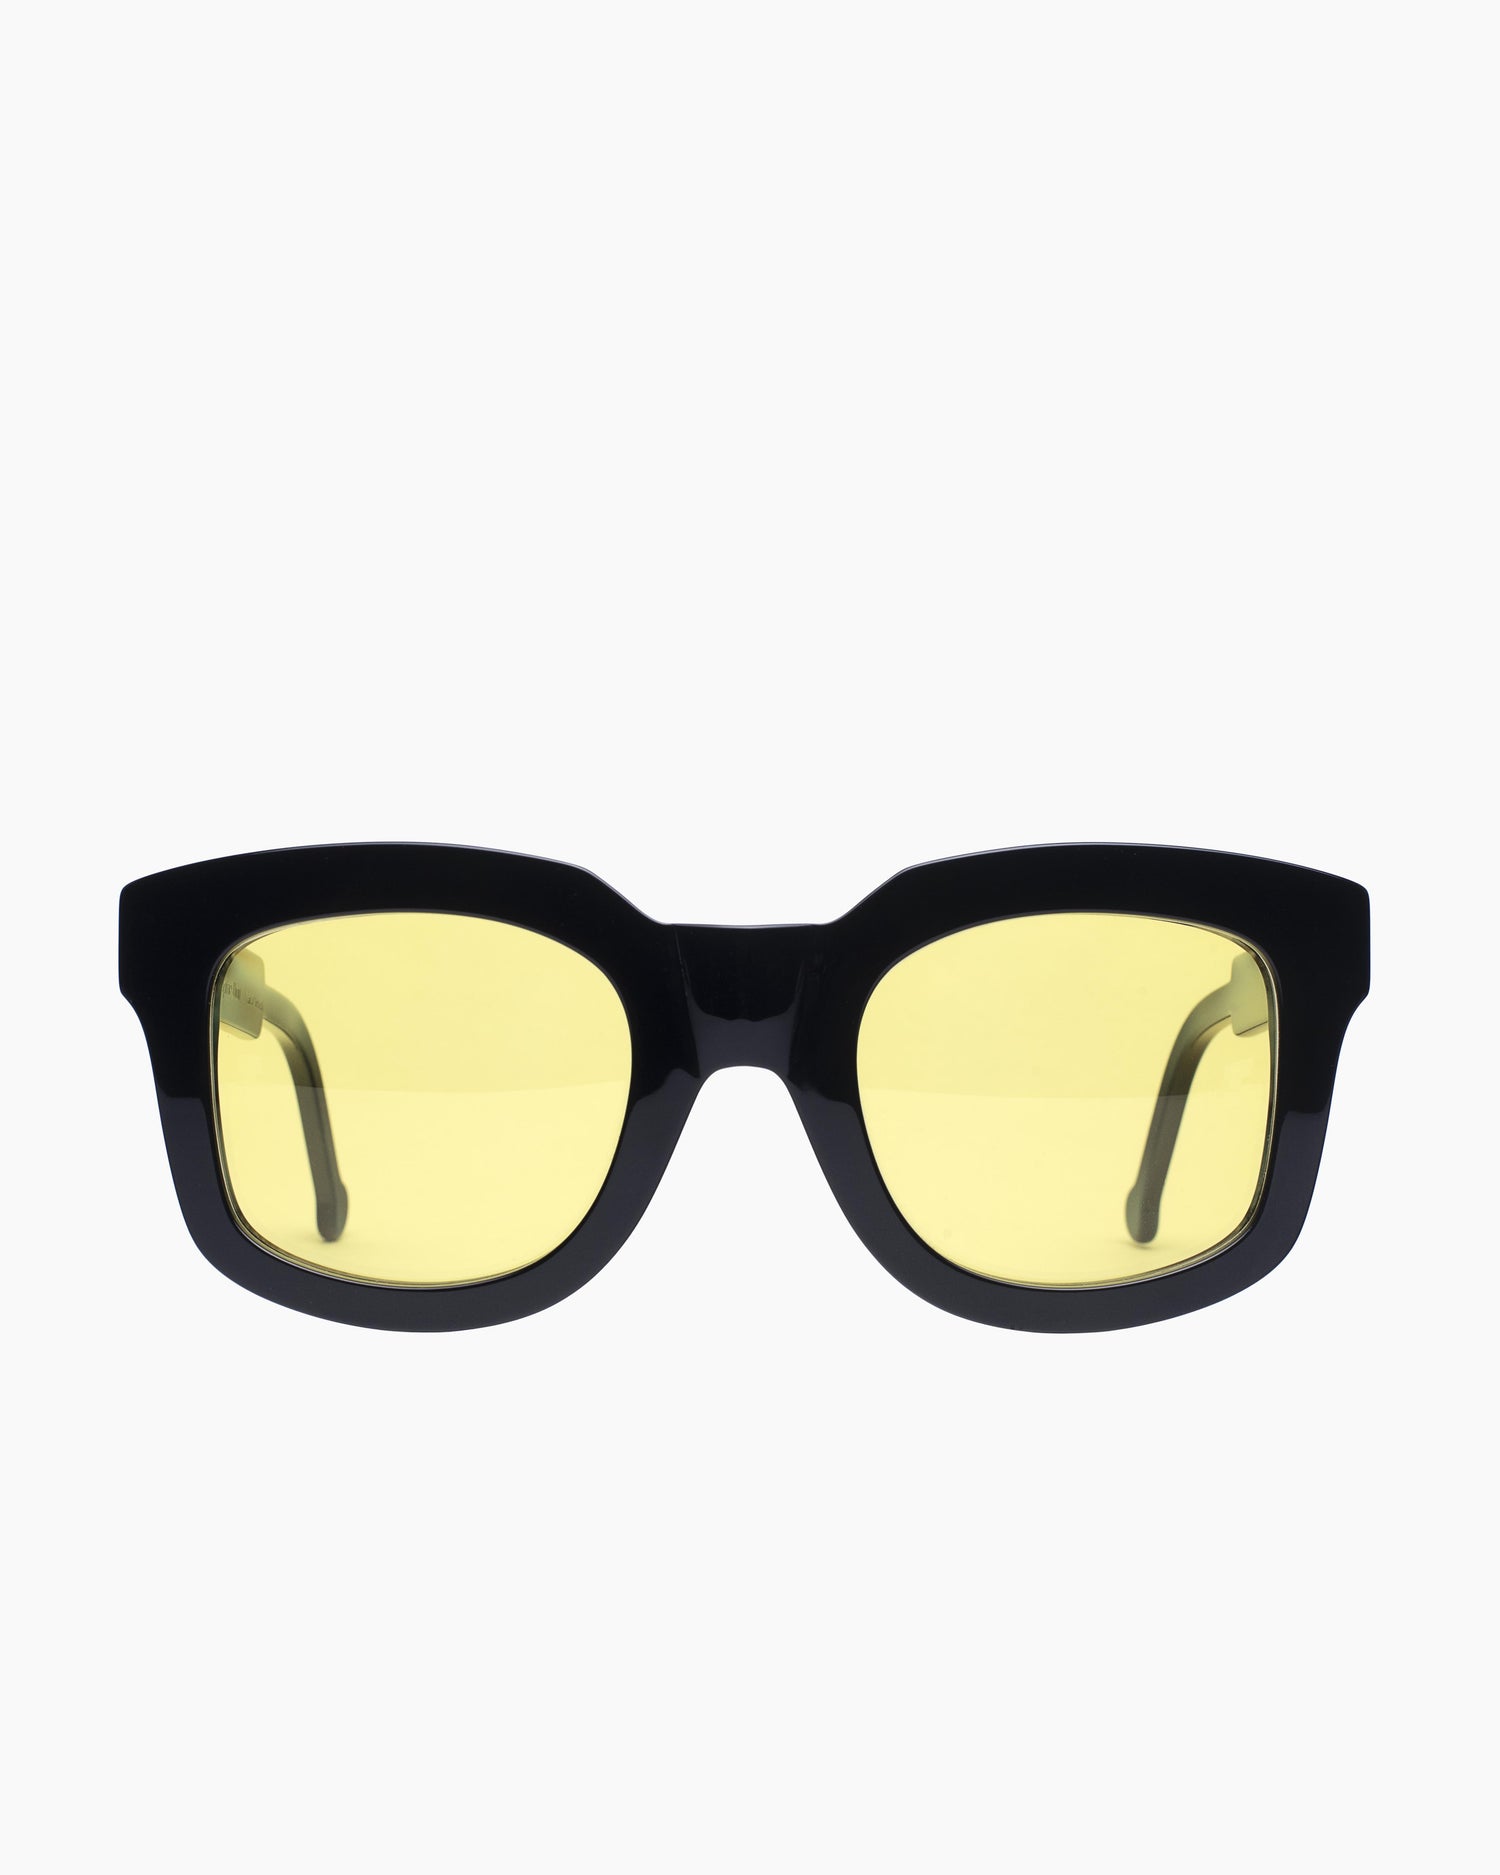 Marie-Sophie Dion - Jacques - Noi yellow lens | glasses bar:  Marie-Sophie Dion